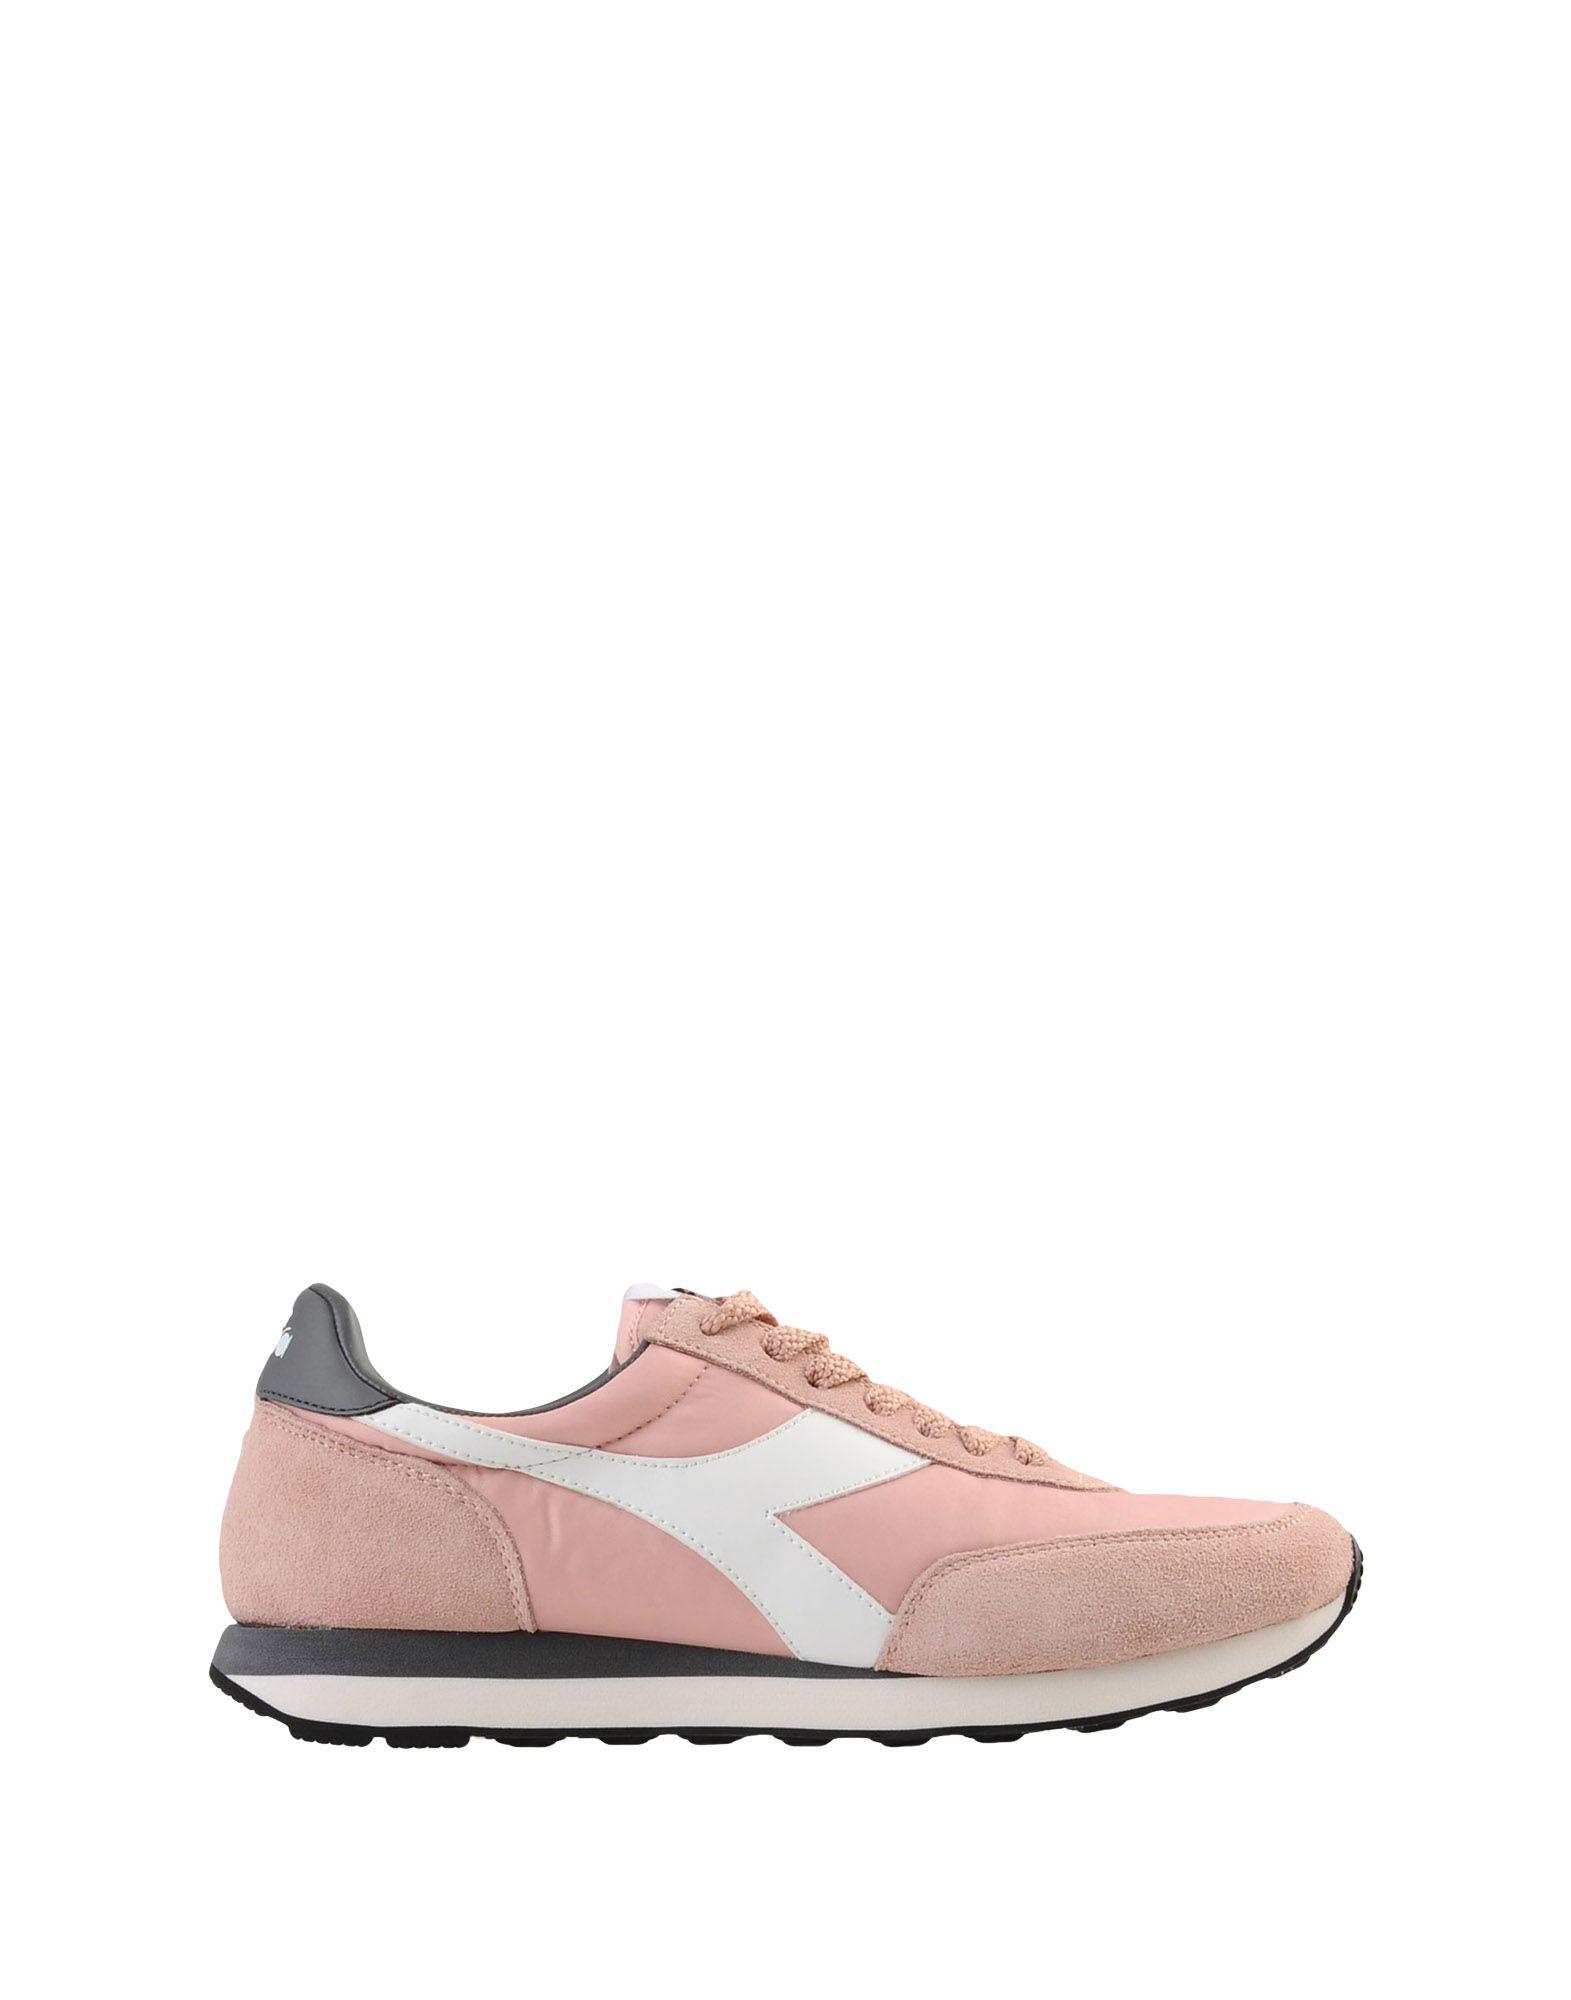 Diadora Suede Low-tops & Sneakers in Light Pink (Pink) - Lyst